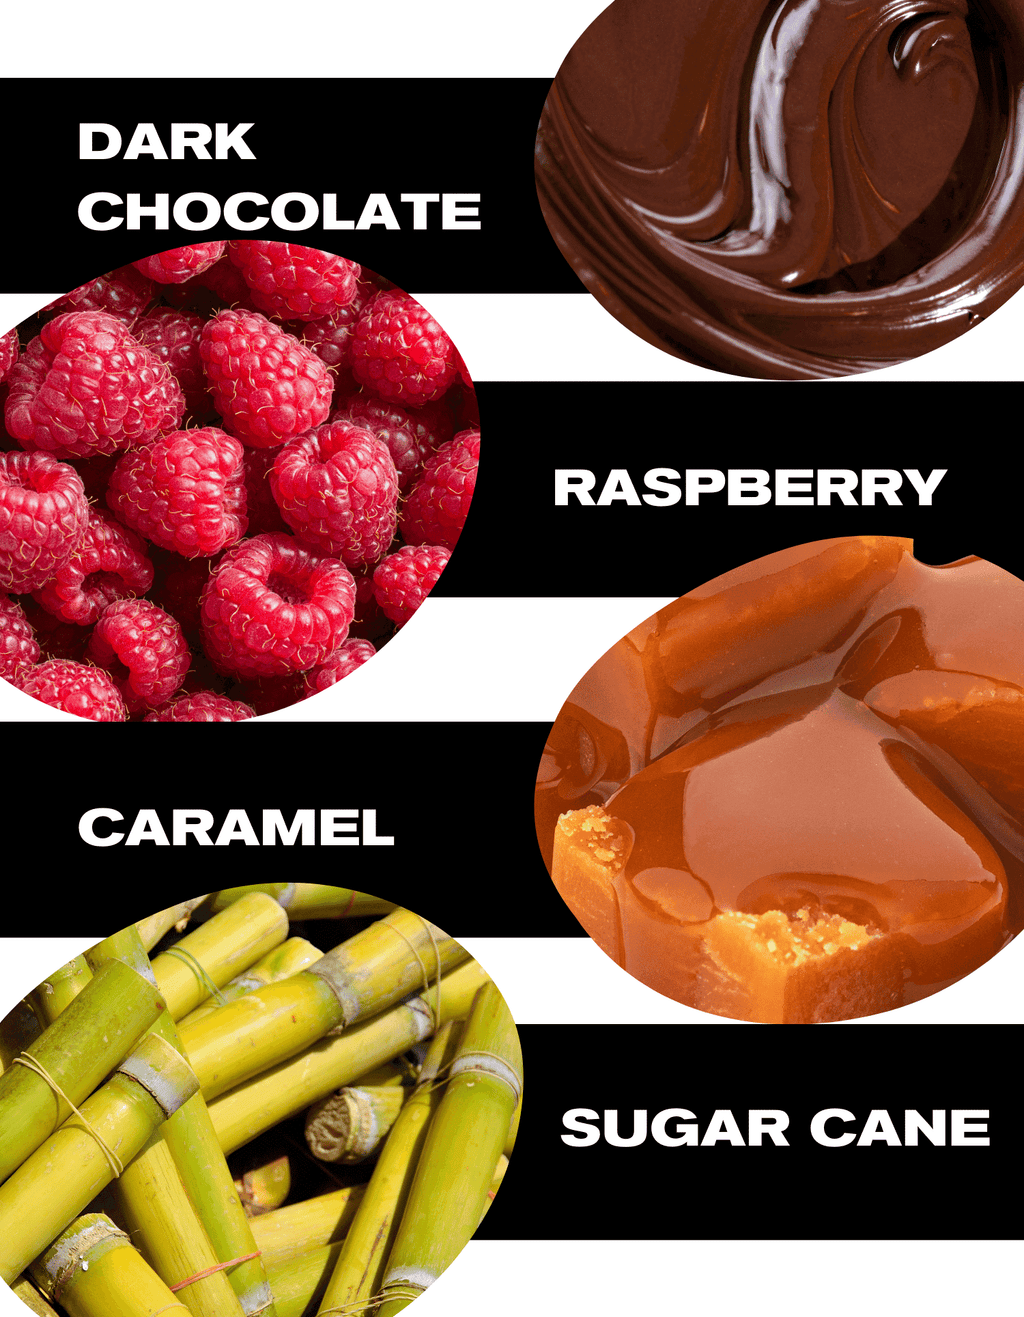 Dark Chocolate, Raspberry, Caramel, Sugar Cane Tasting Notes